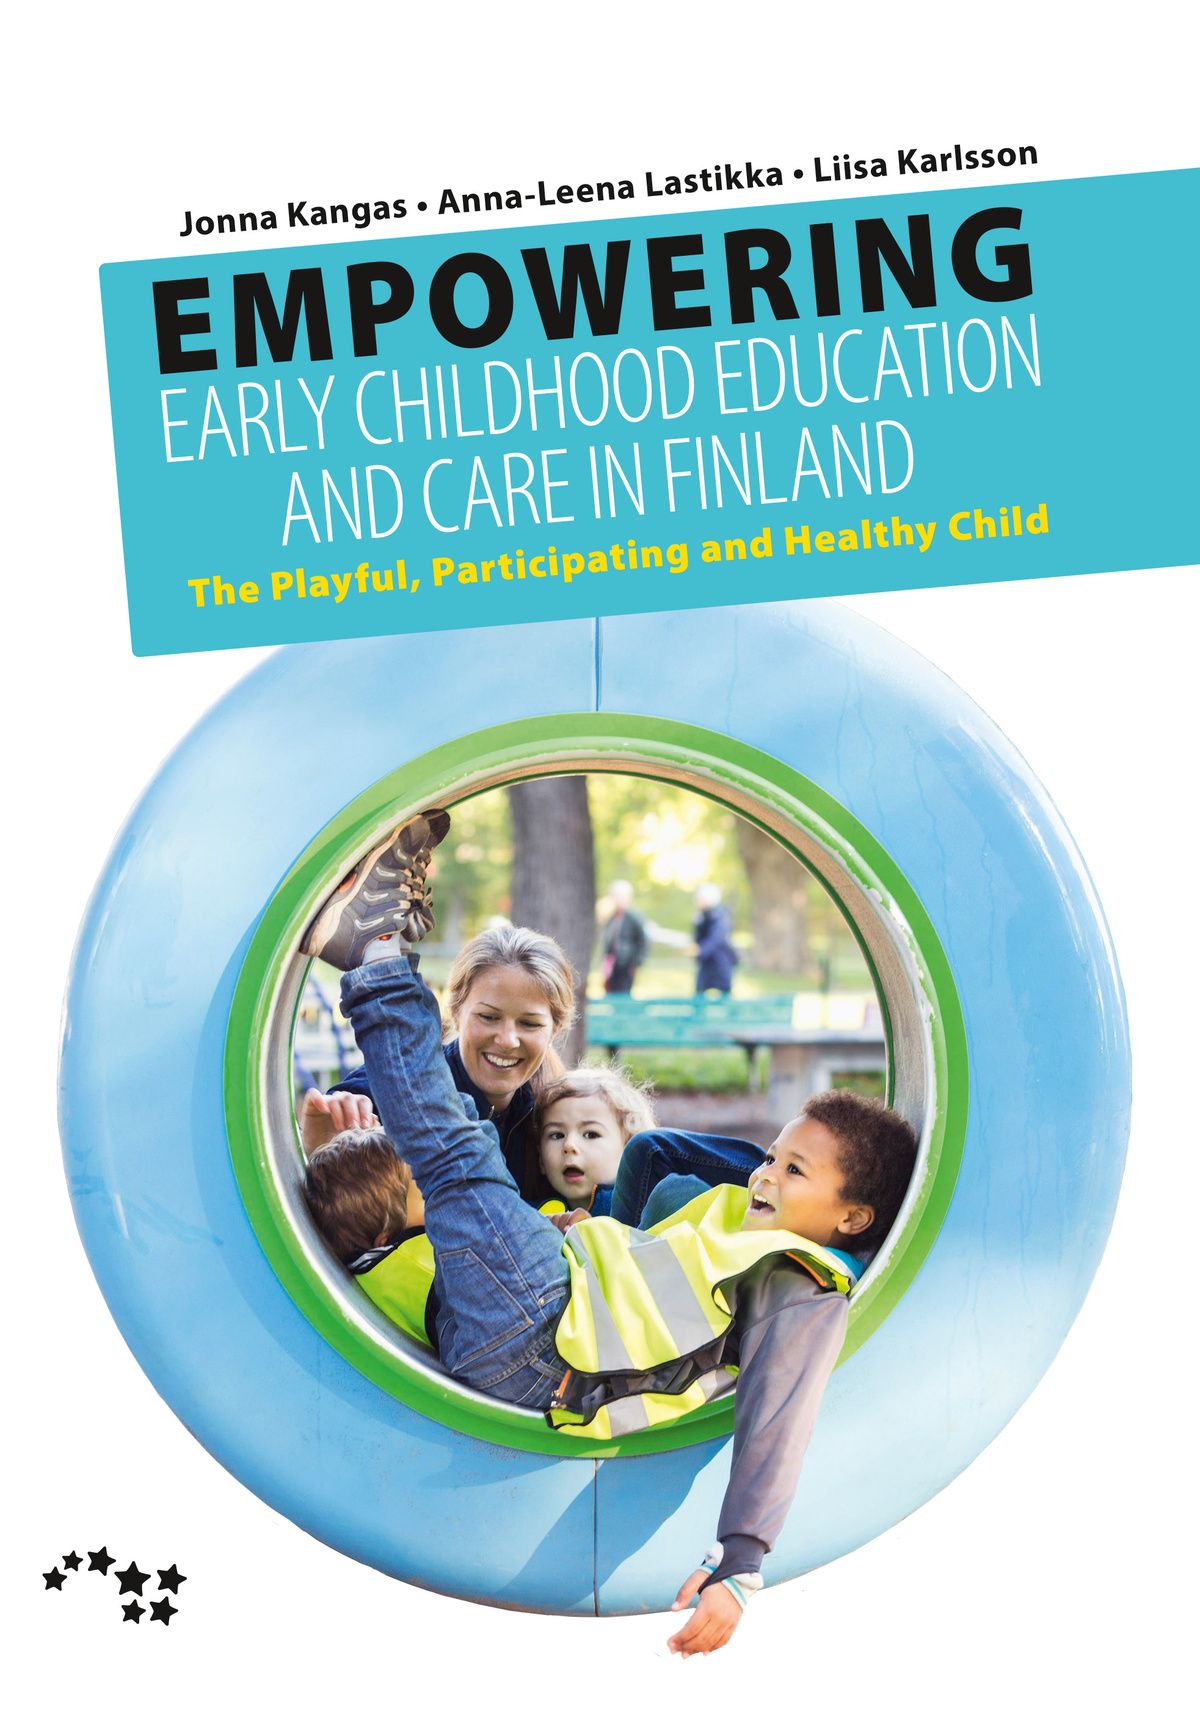 Jonna Kangas & Anna-Leena Lastikka & Liisa Karlsson : Empowering Early Childhood Education and Care